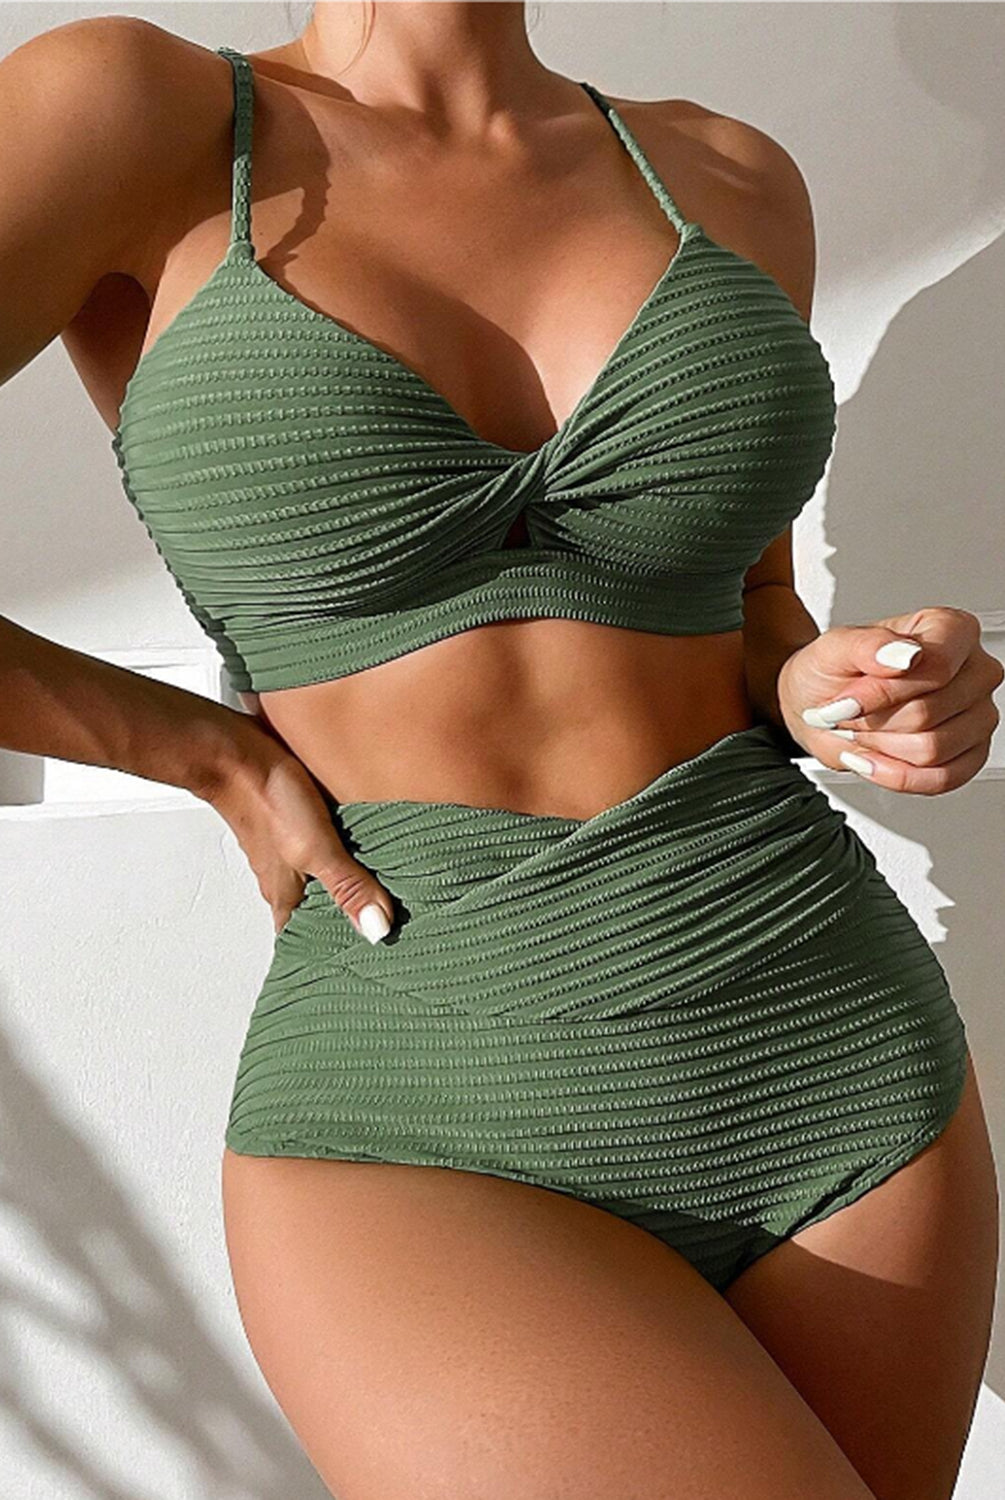 Model presenting a stylish high-waisted bikini set in vibrant green and blue